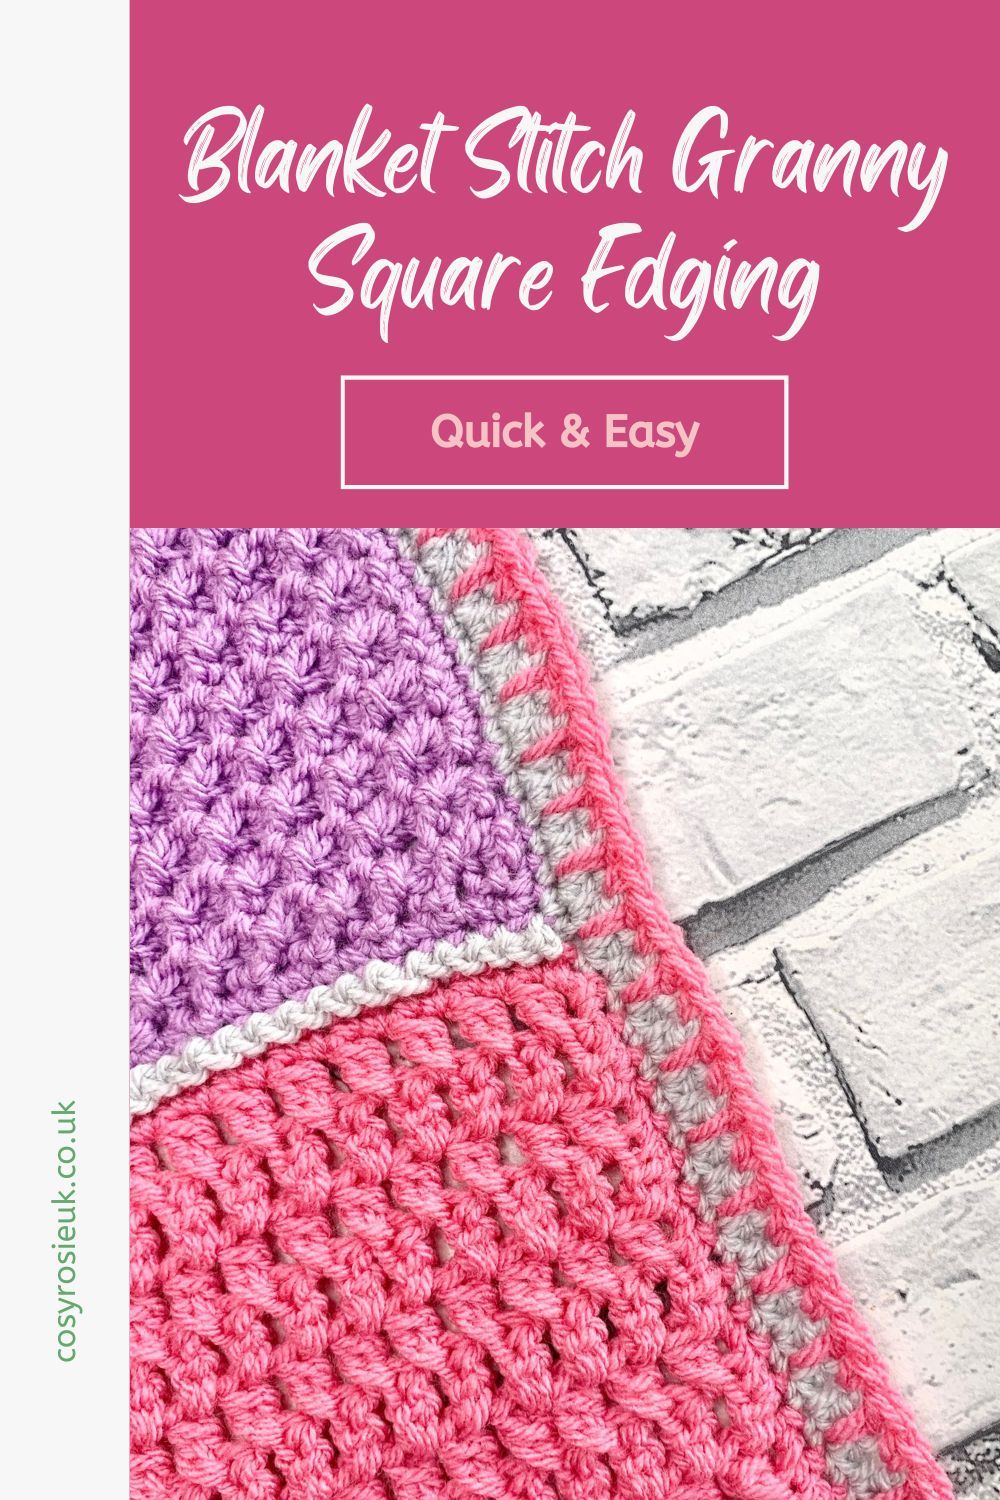 Blanket Stitch edging for granny squares